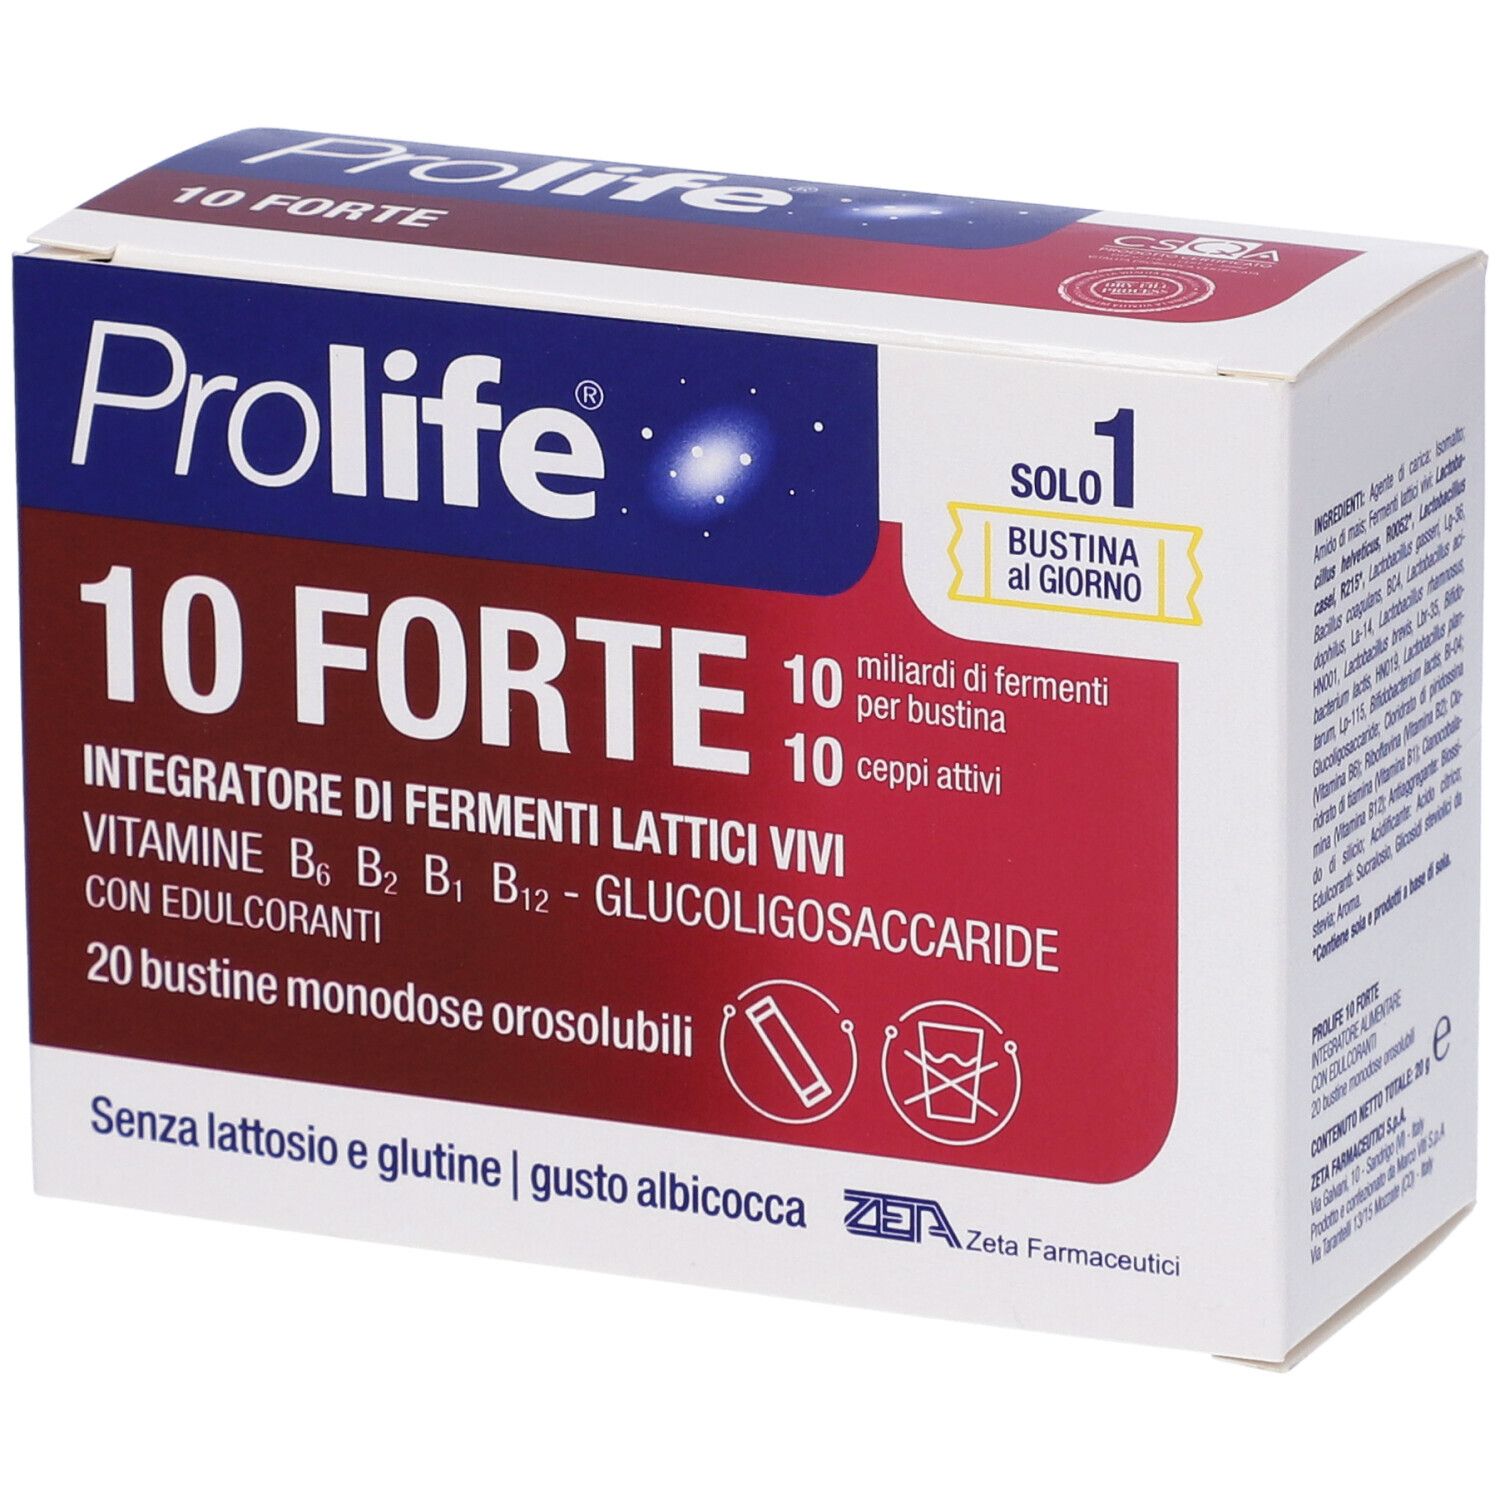 Image of Prolife(R) 10 Forte Zeta Farmaceutici 20 Bustine Monodose Orosolubili